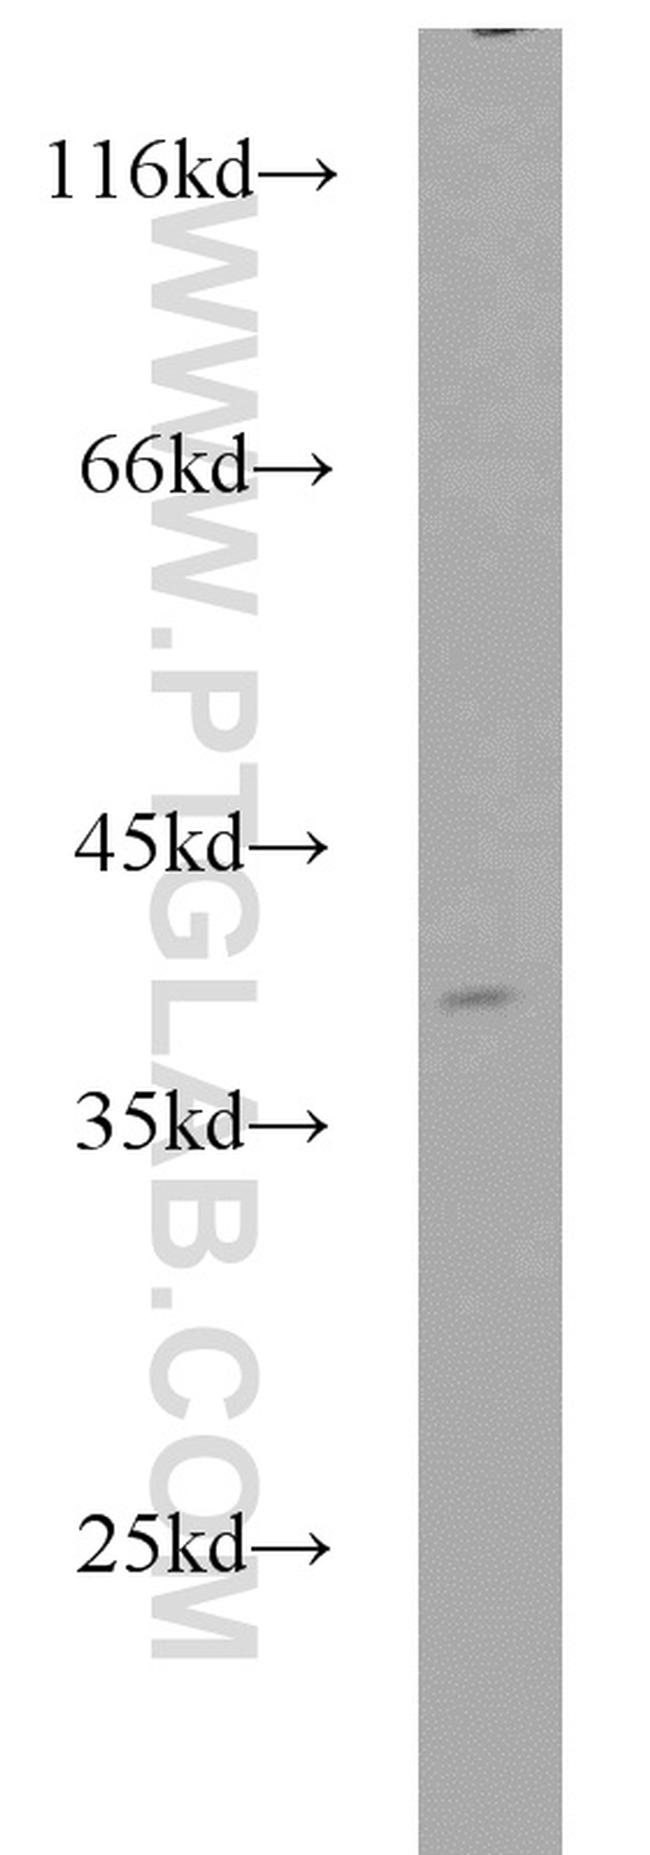 APEX1 Antibody in Western Blot (WB)